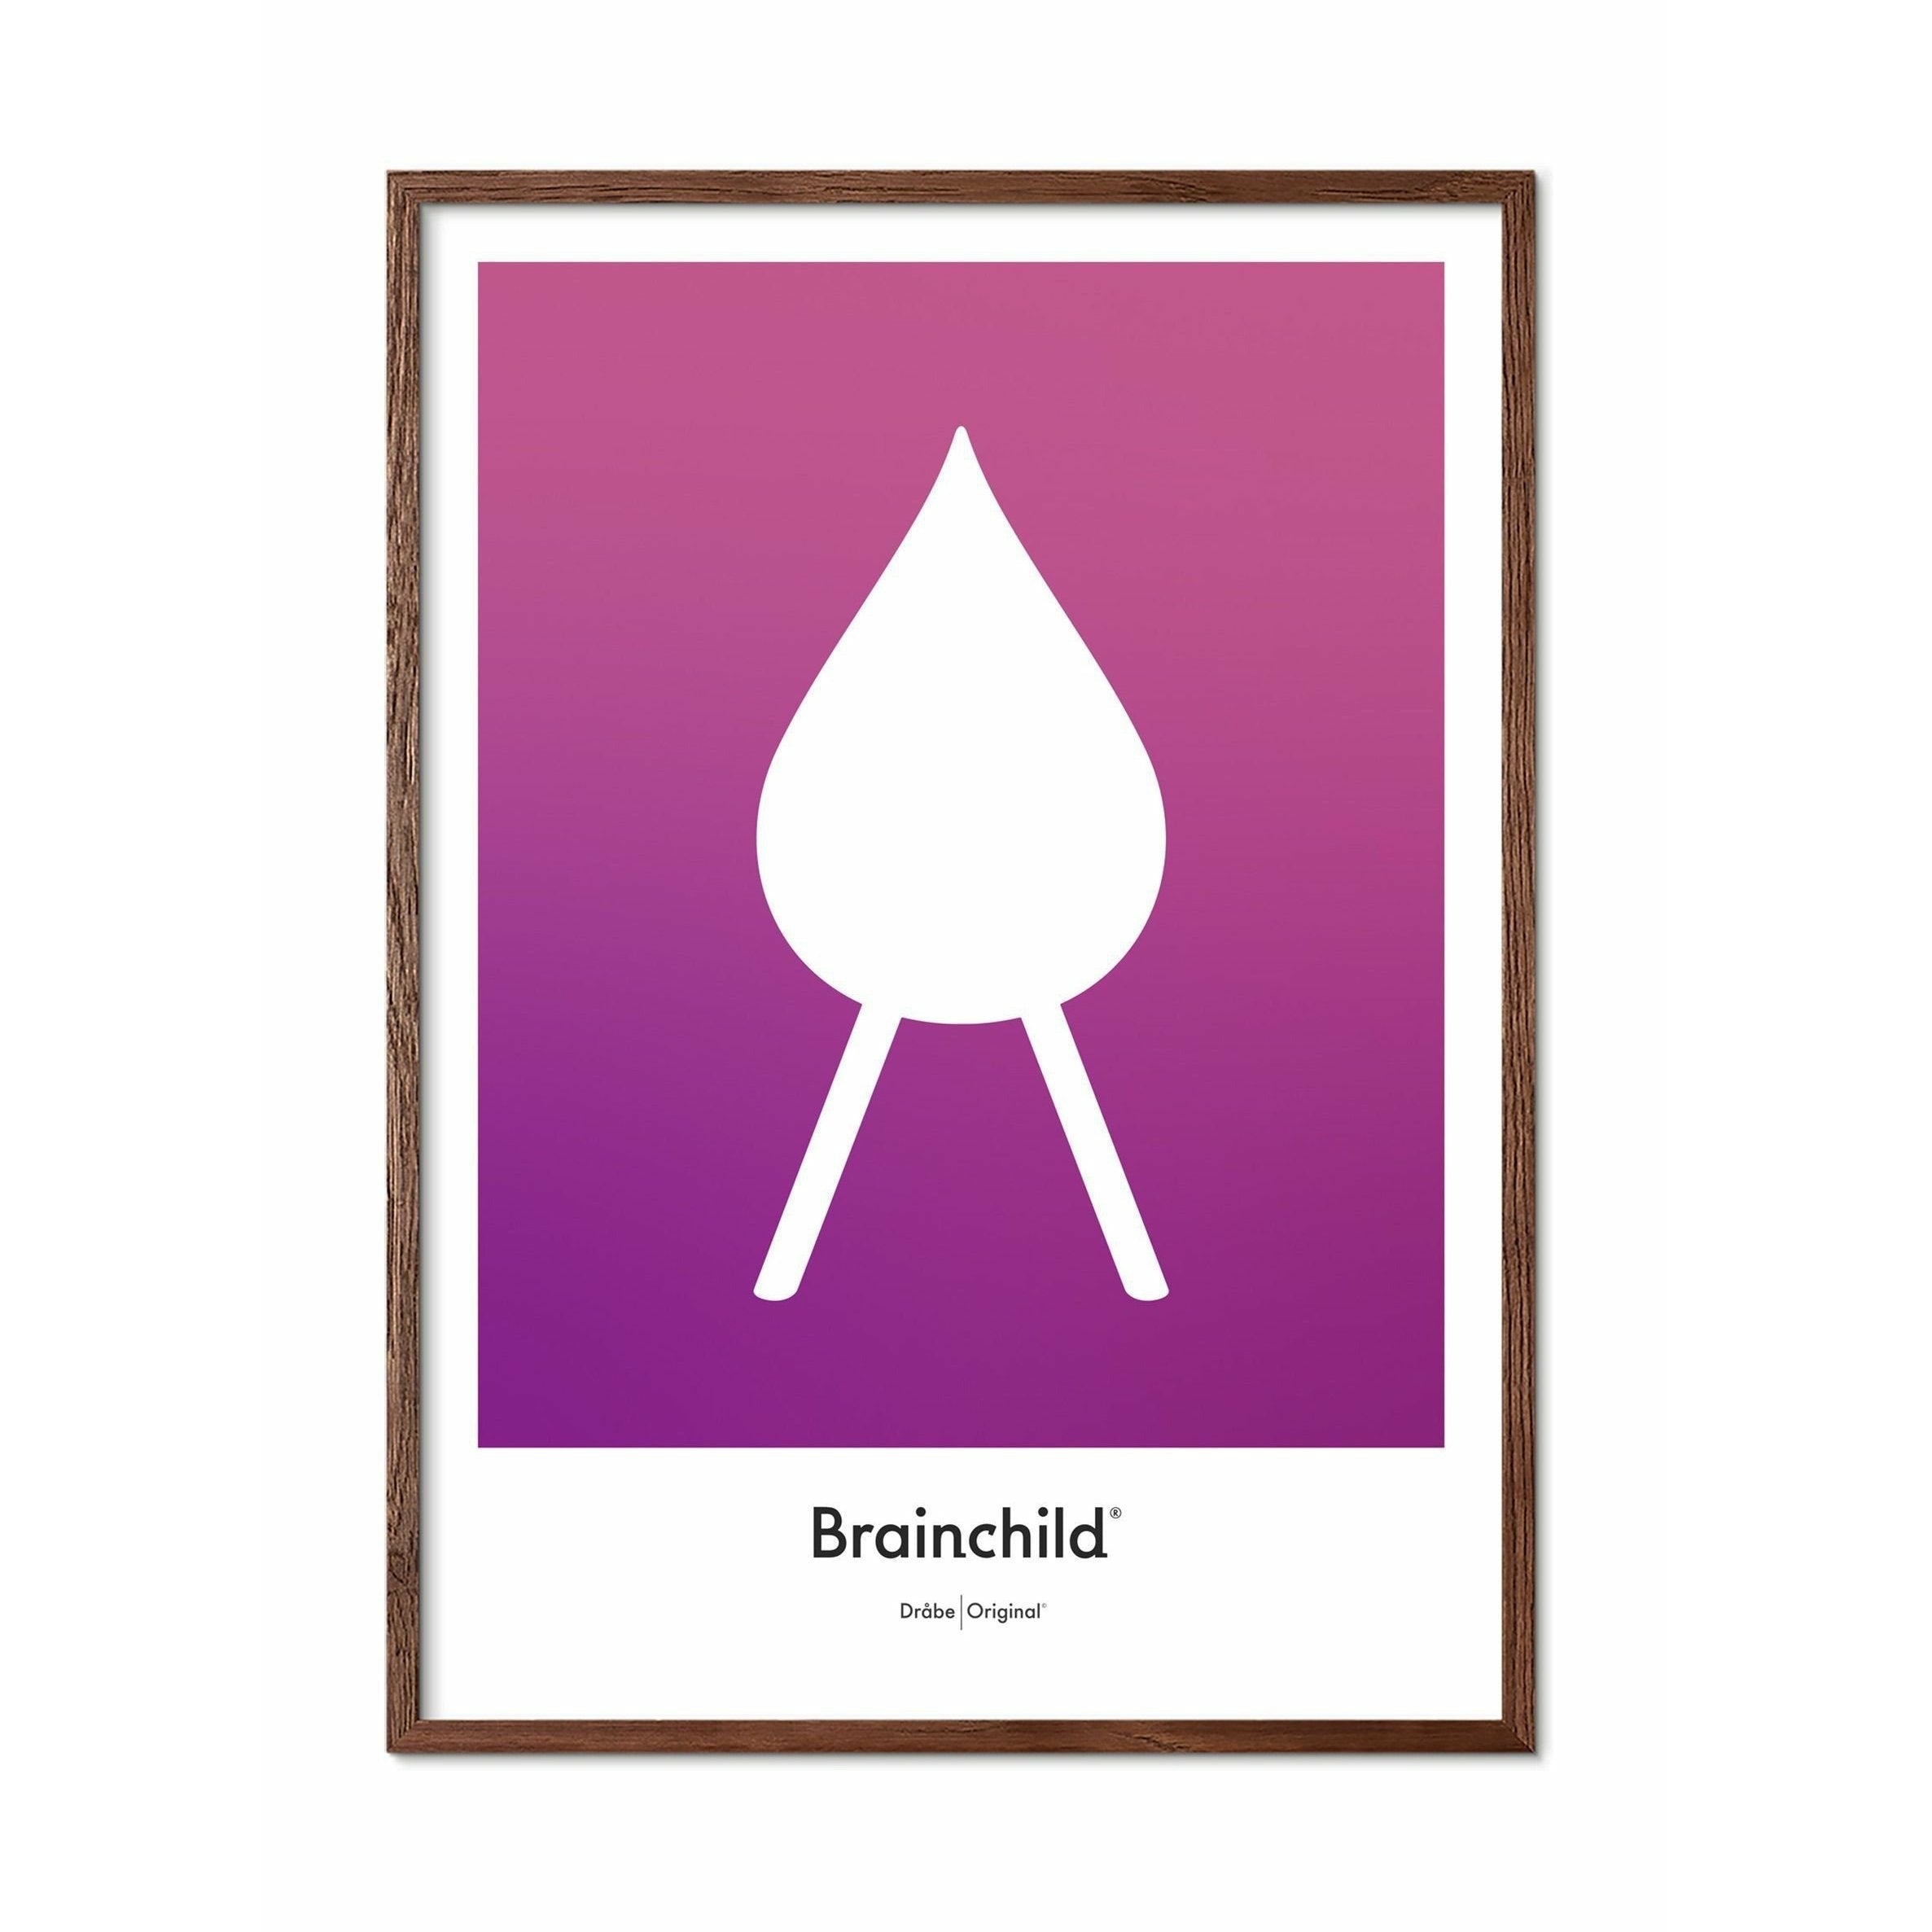 Brainchild Drop designikonplakat, mørk træ ramme A5, lilla